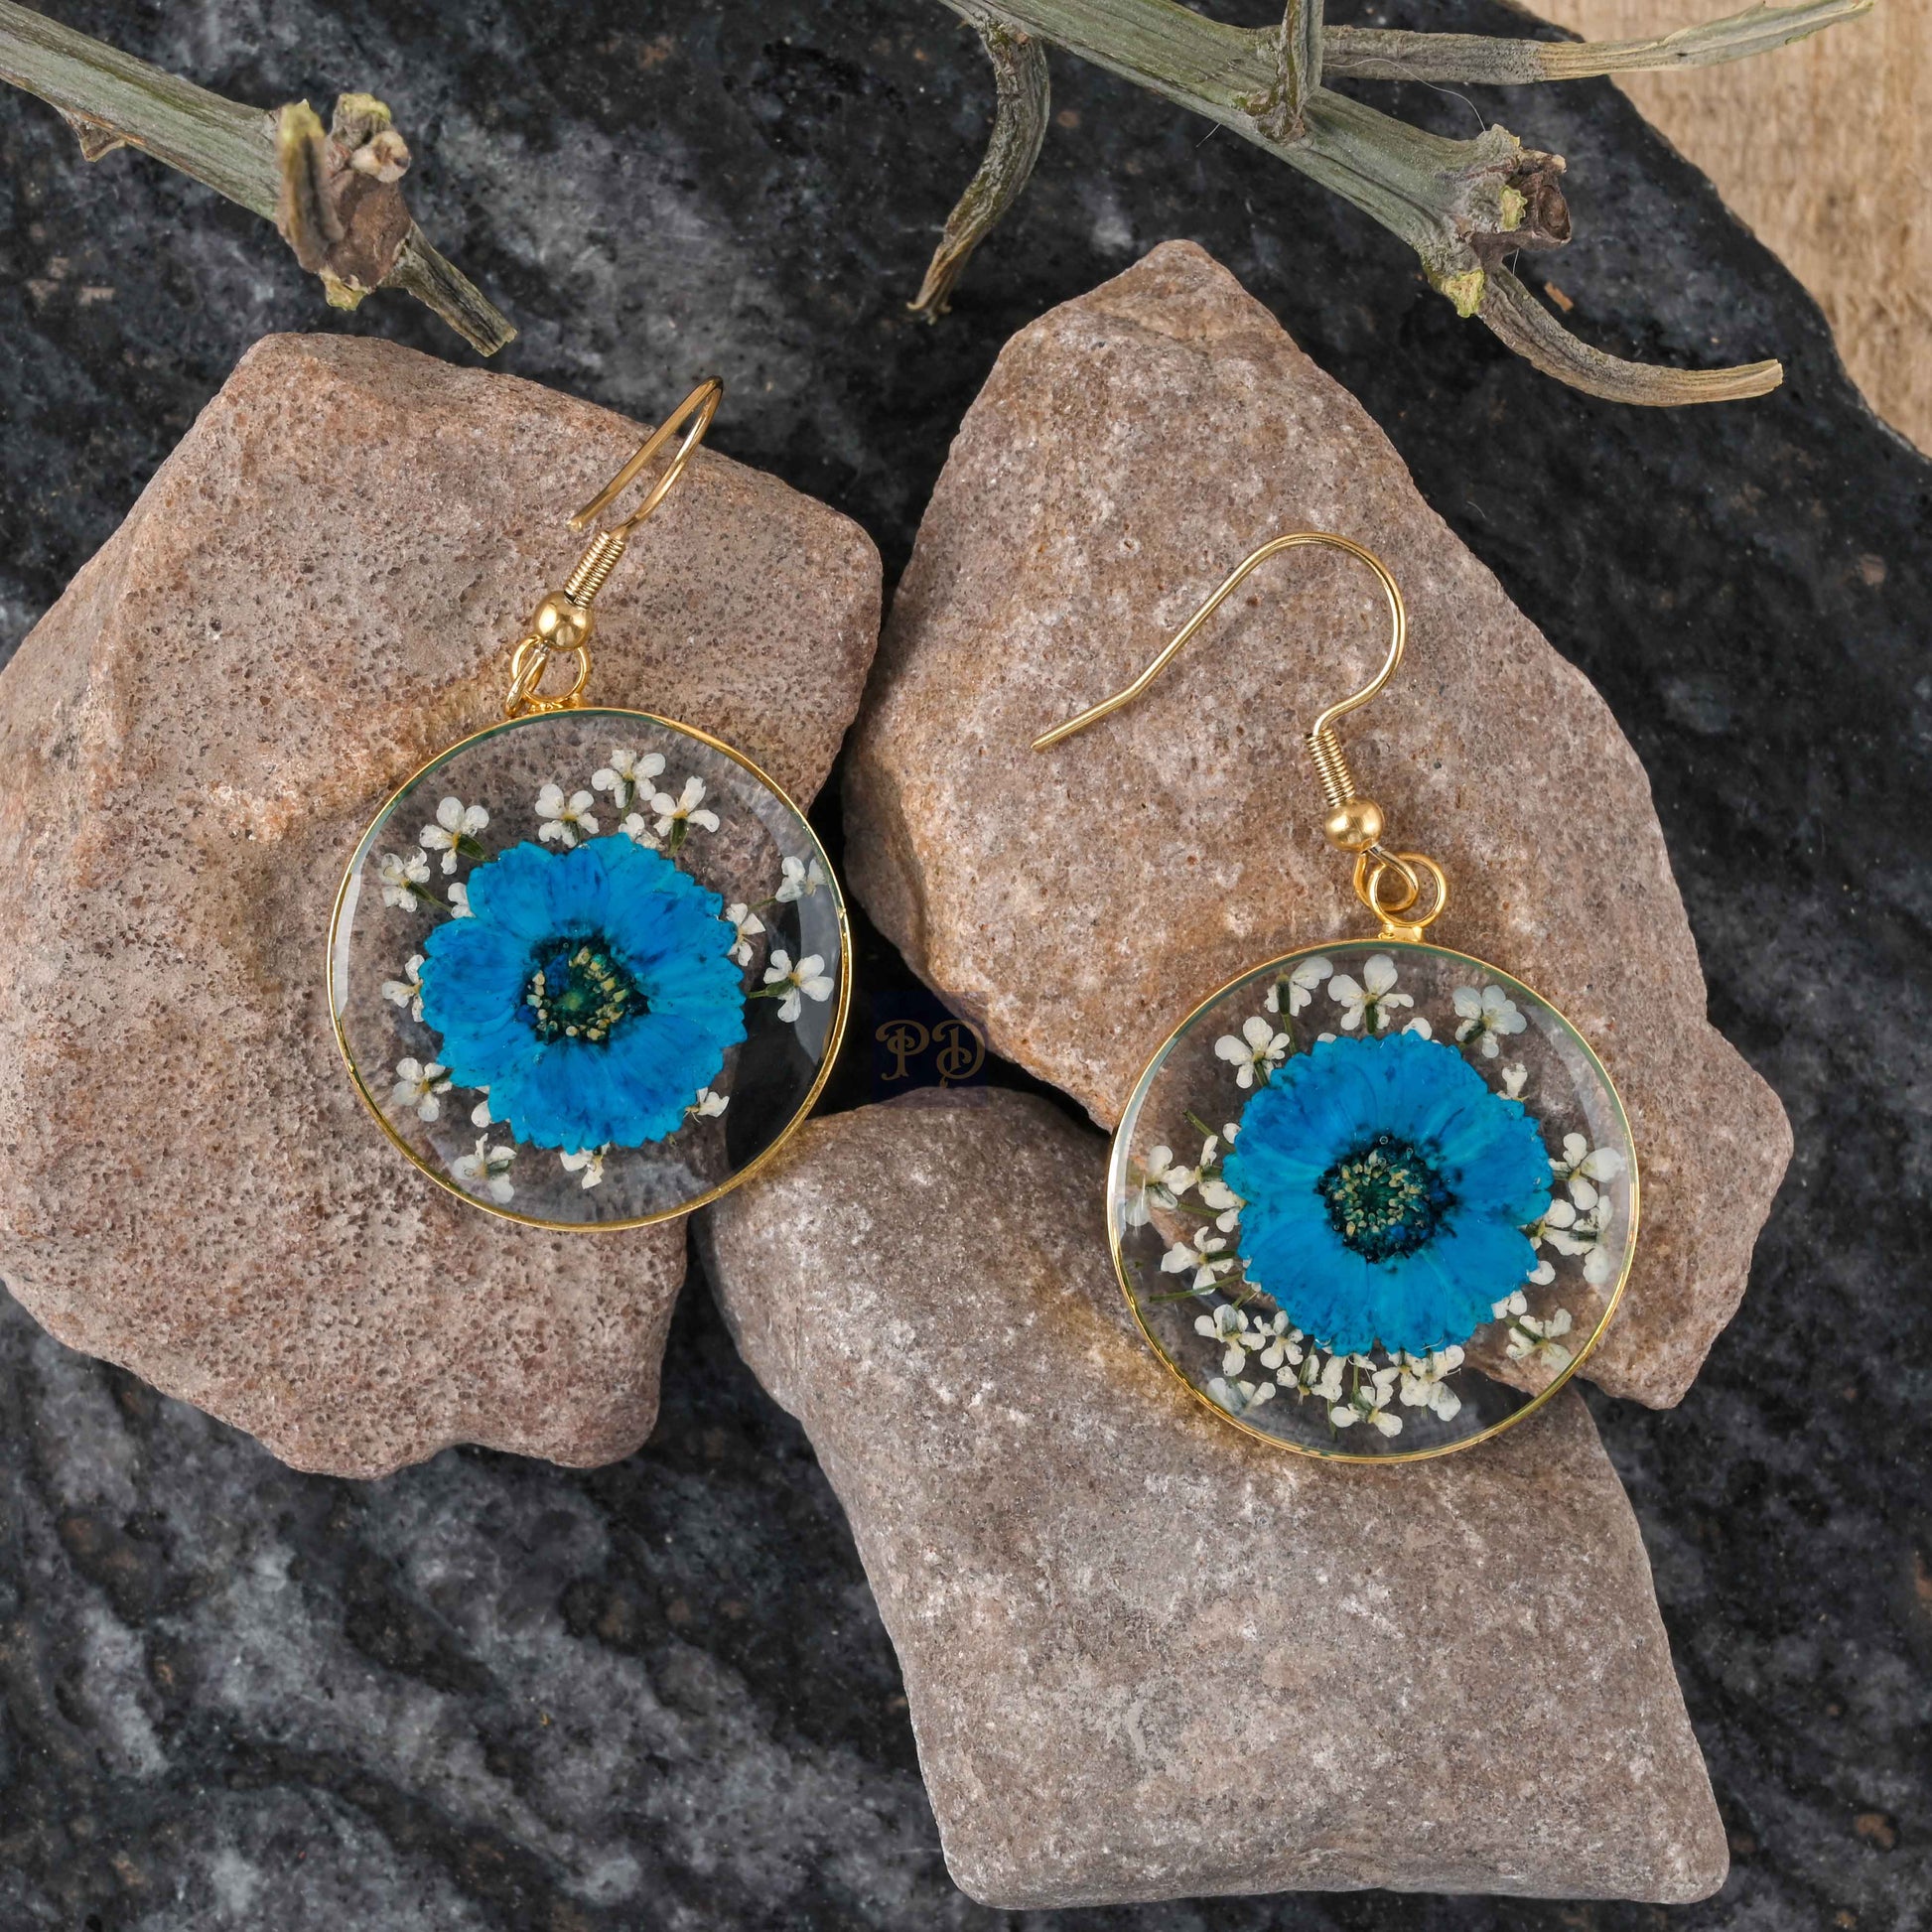 Magical Eco-Resin Jewelry Encapsulates Ireland's Wildflowers